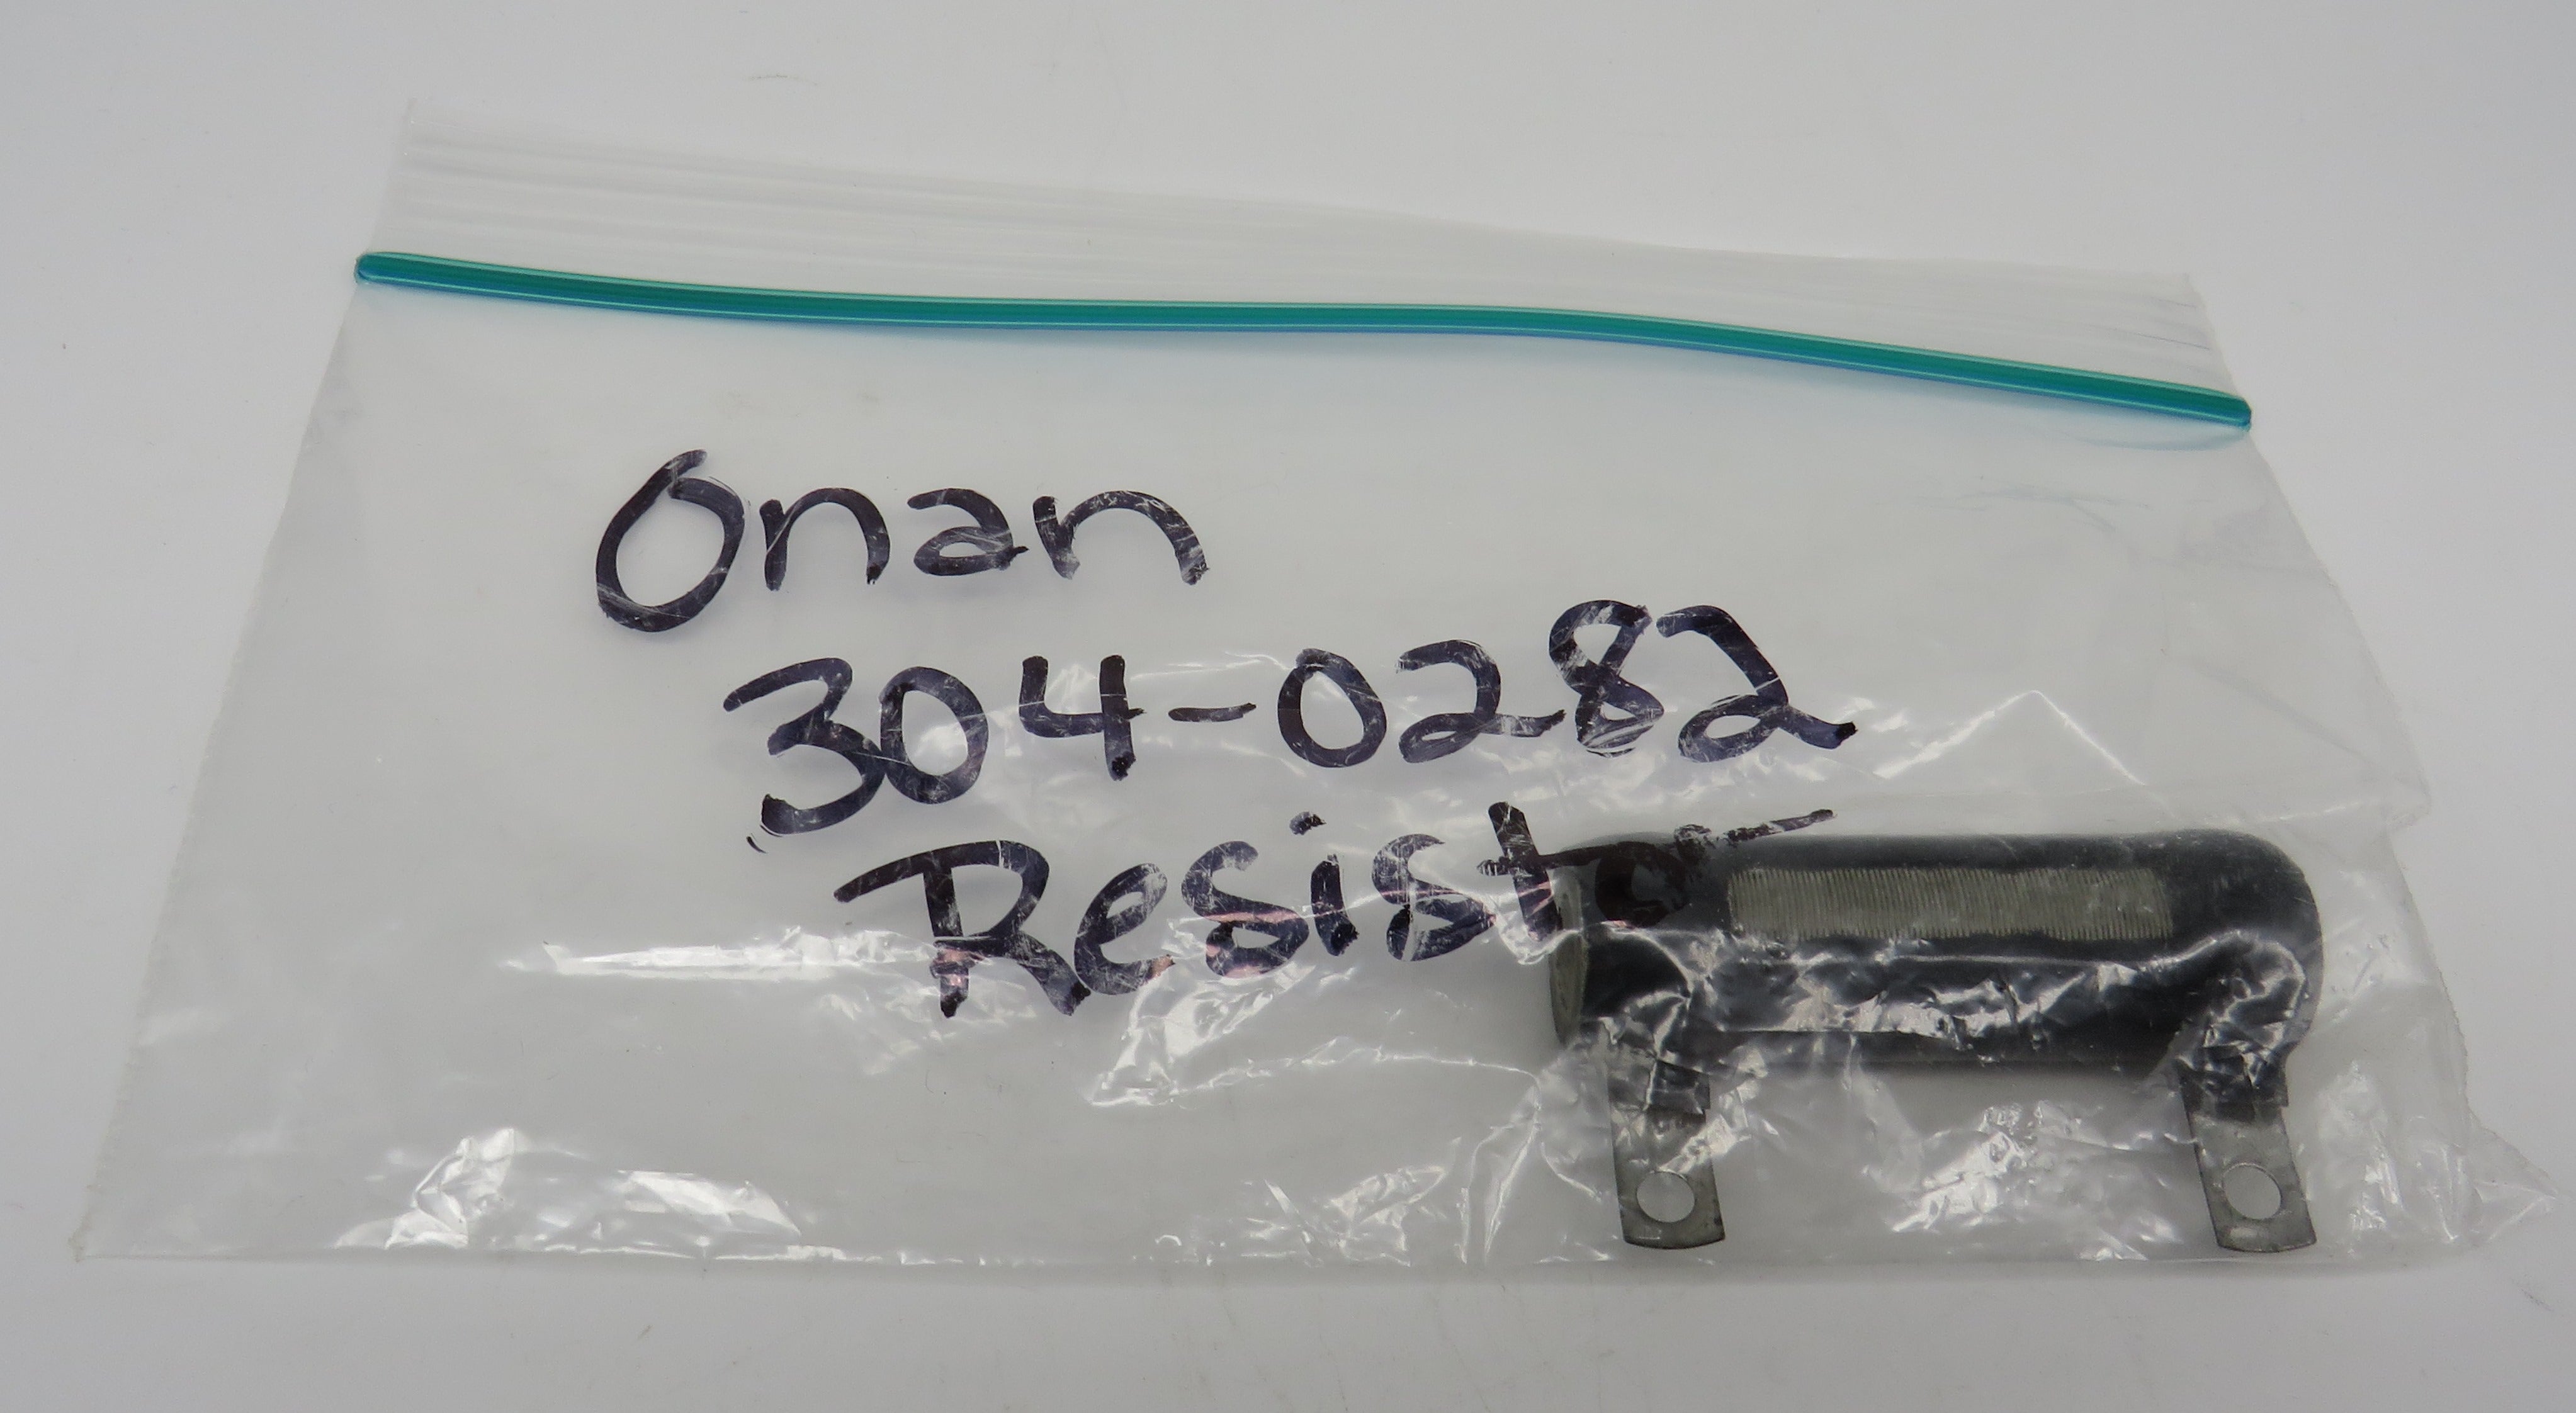 304-0282 Onan ADJ Resistor For MCCK (Spec A-G) 120 Volt Set (300 Ohm, 25 watt) Control-O-matic (Spec C only) 